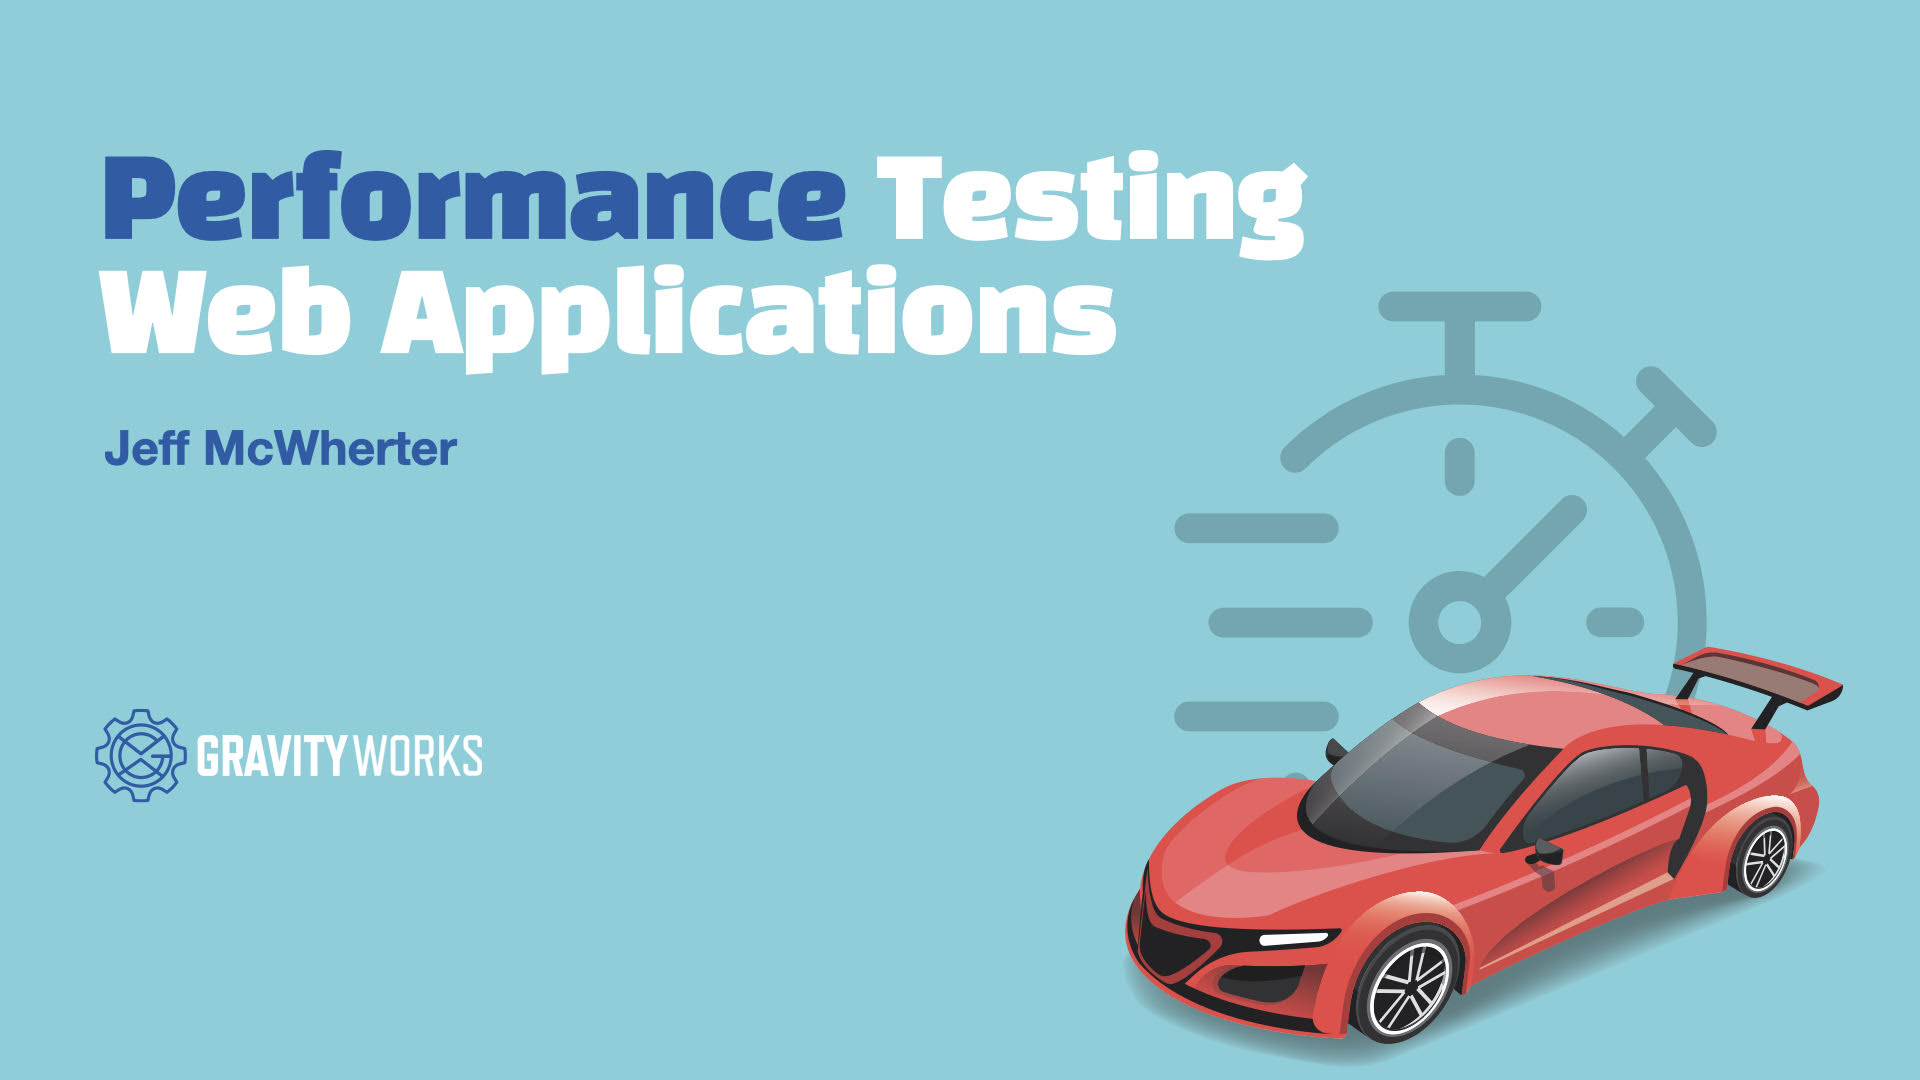 Performance testing web applications